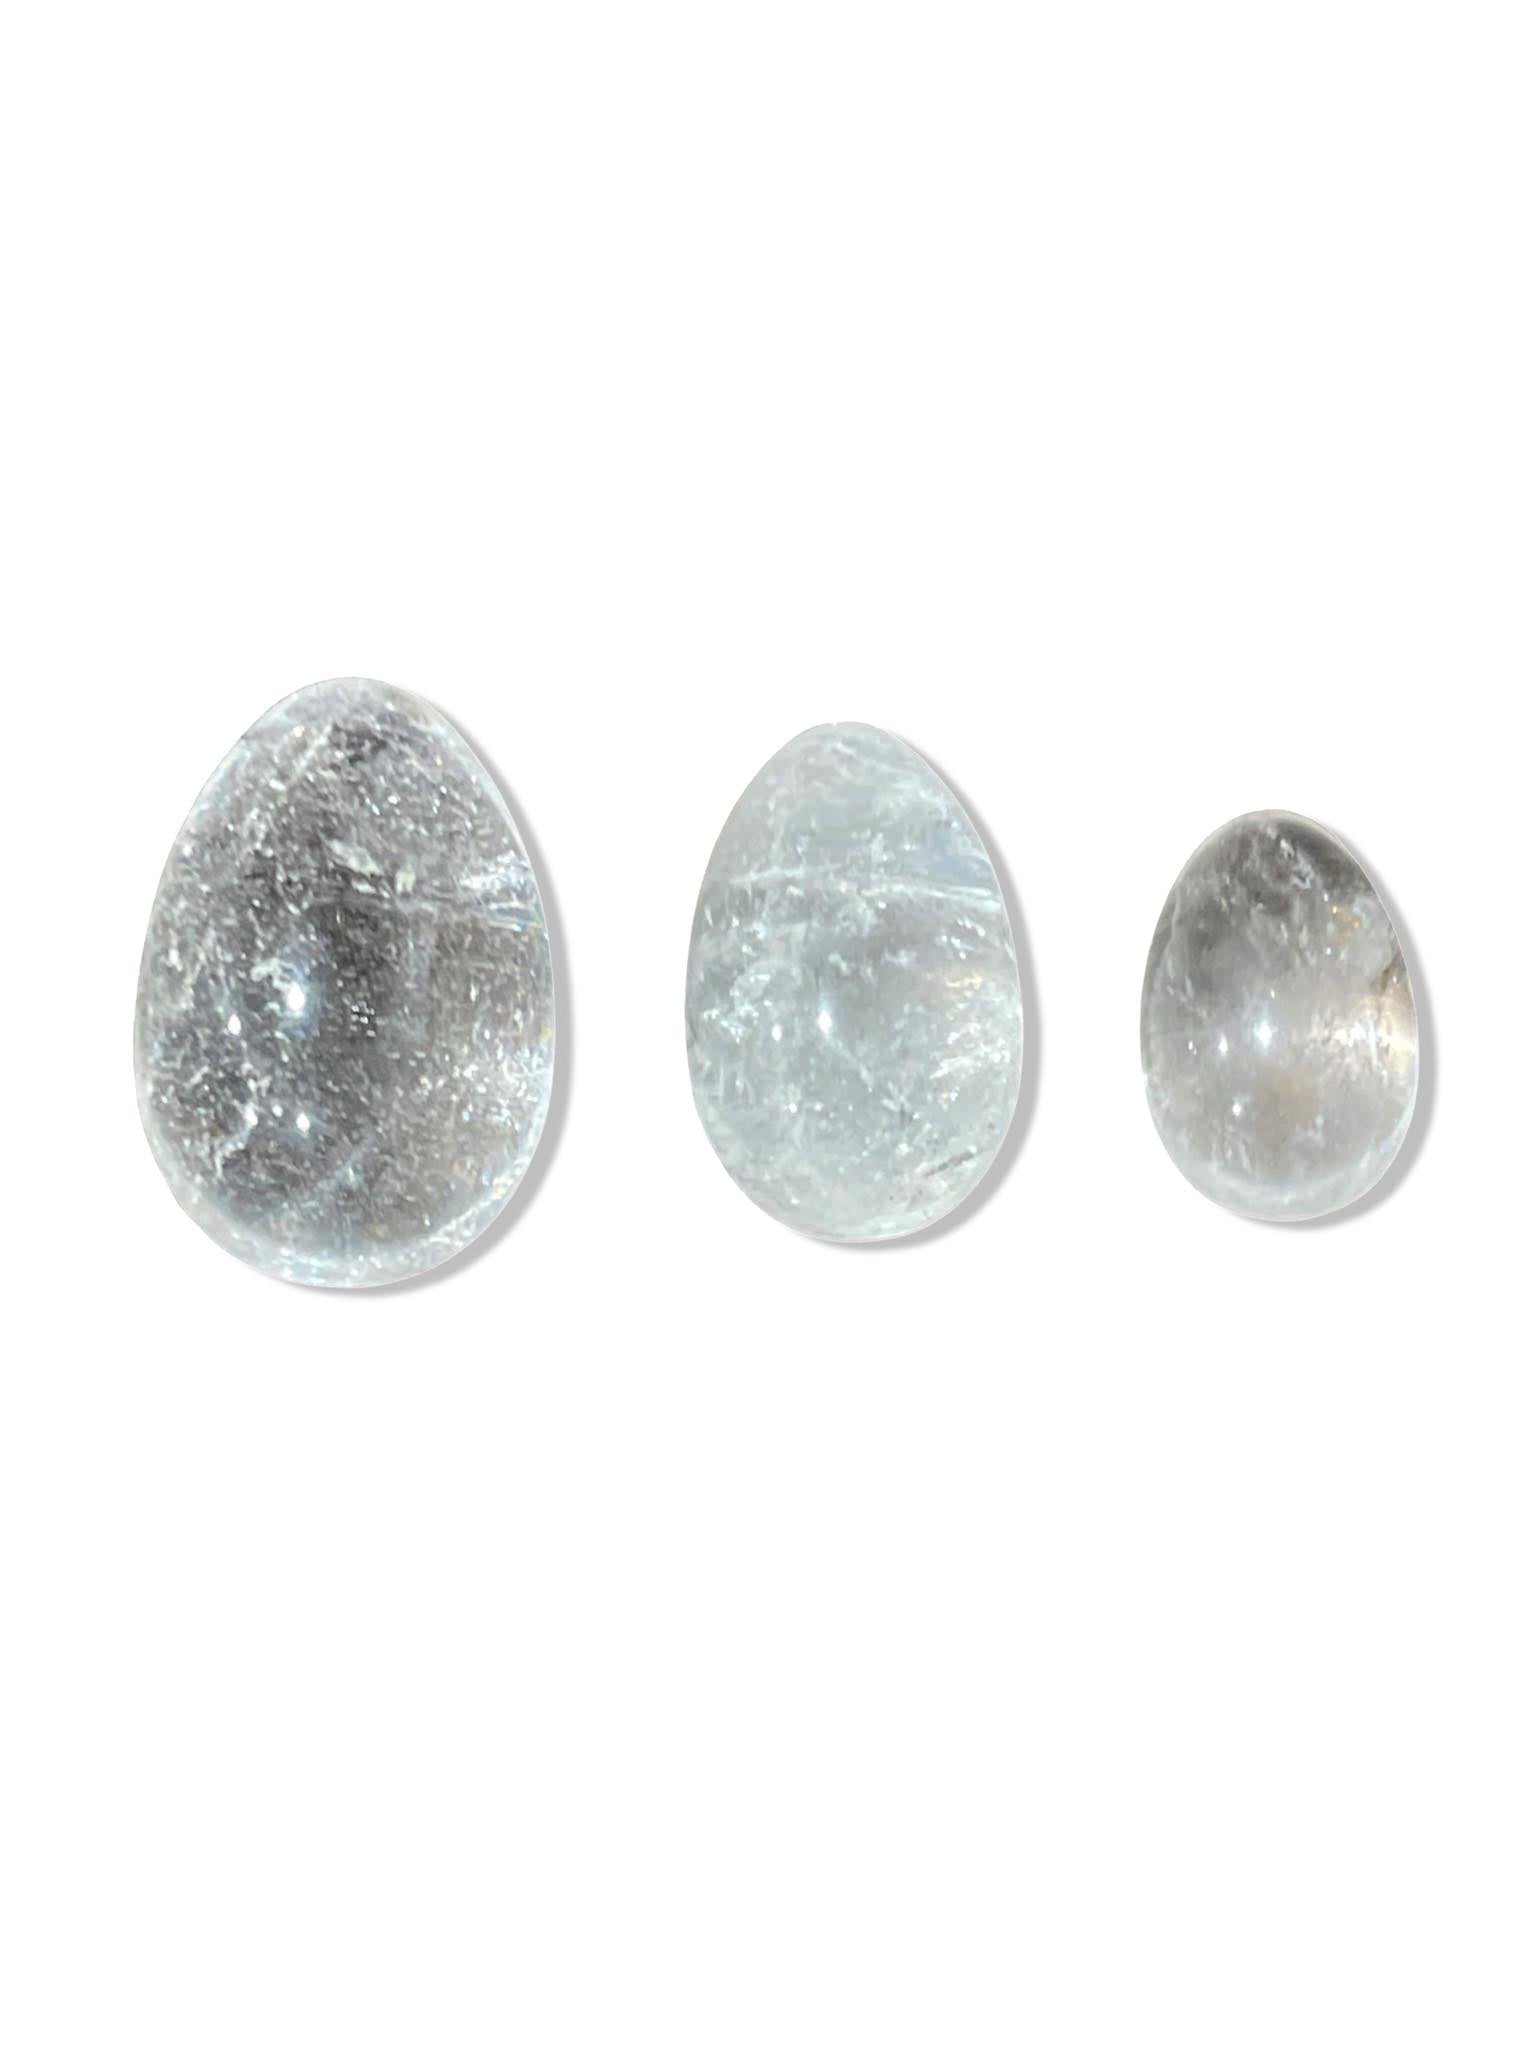 clear quartz yoni eggs